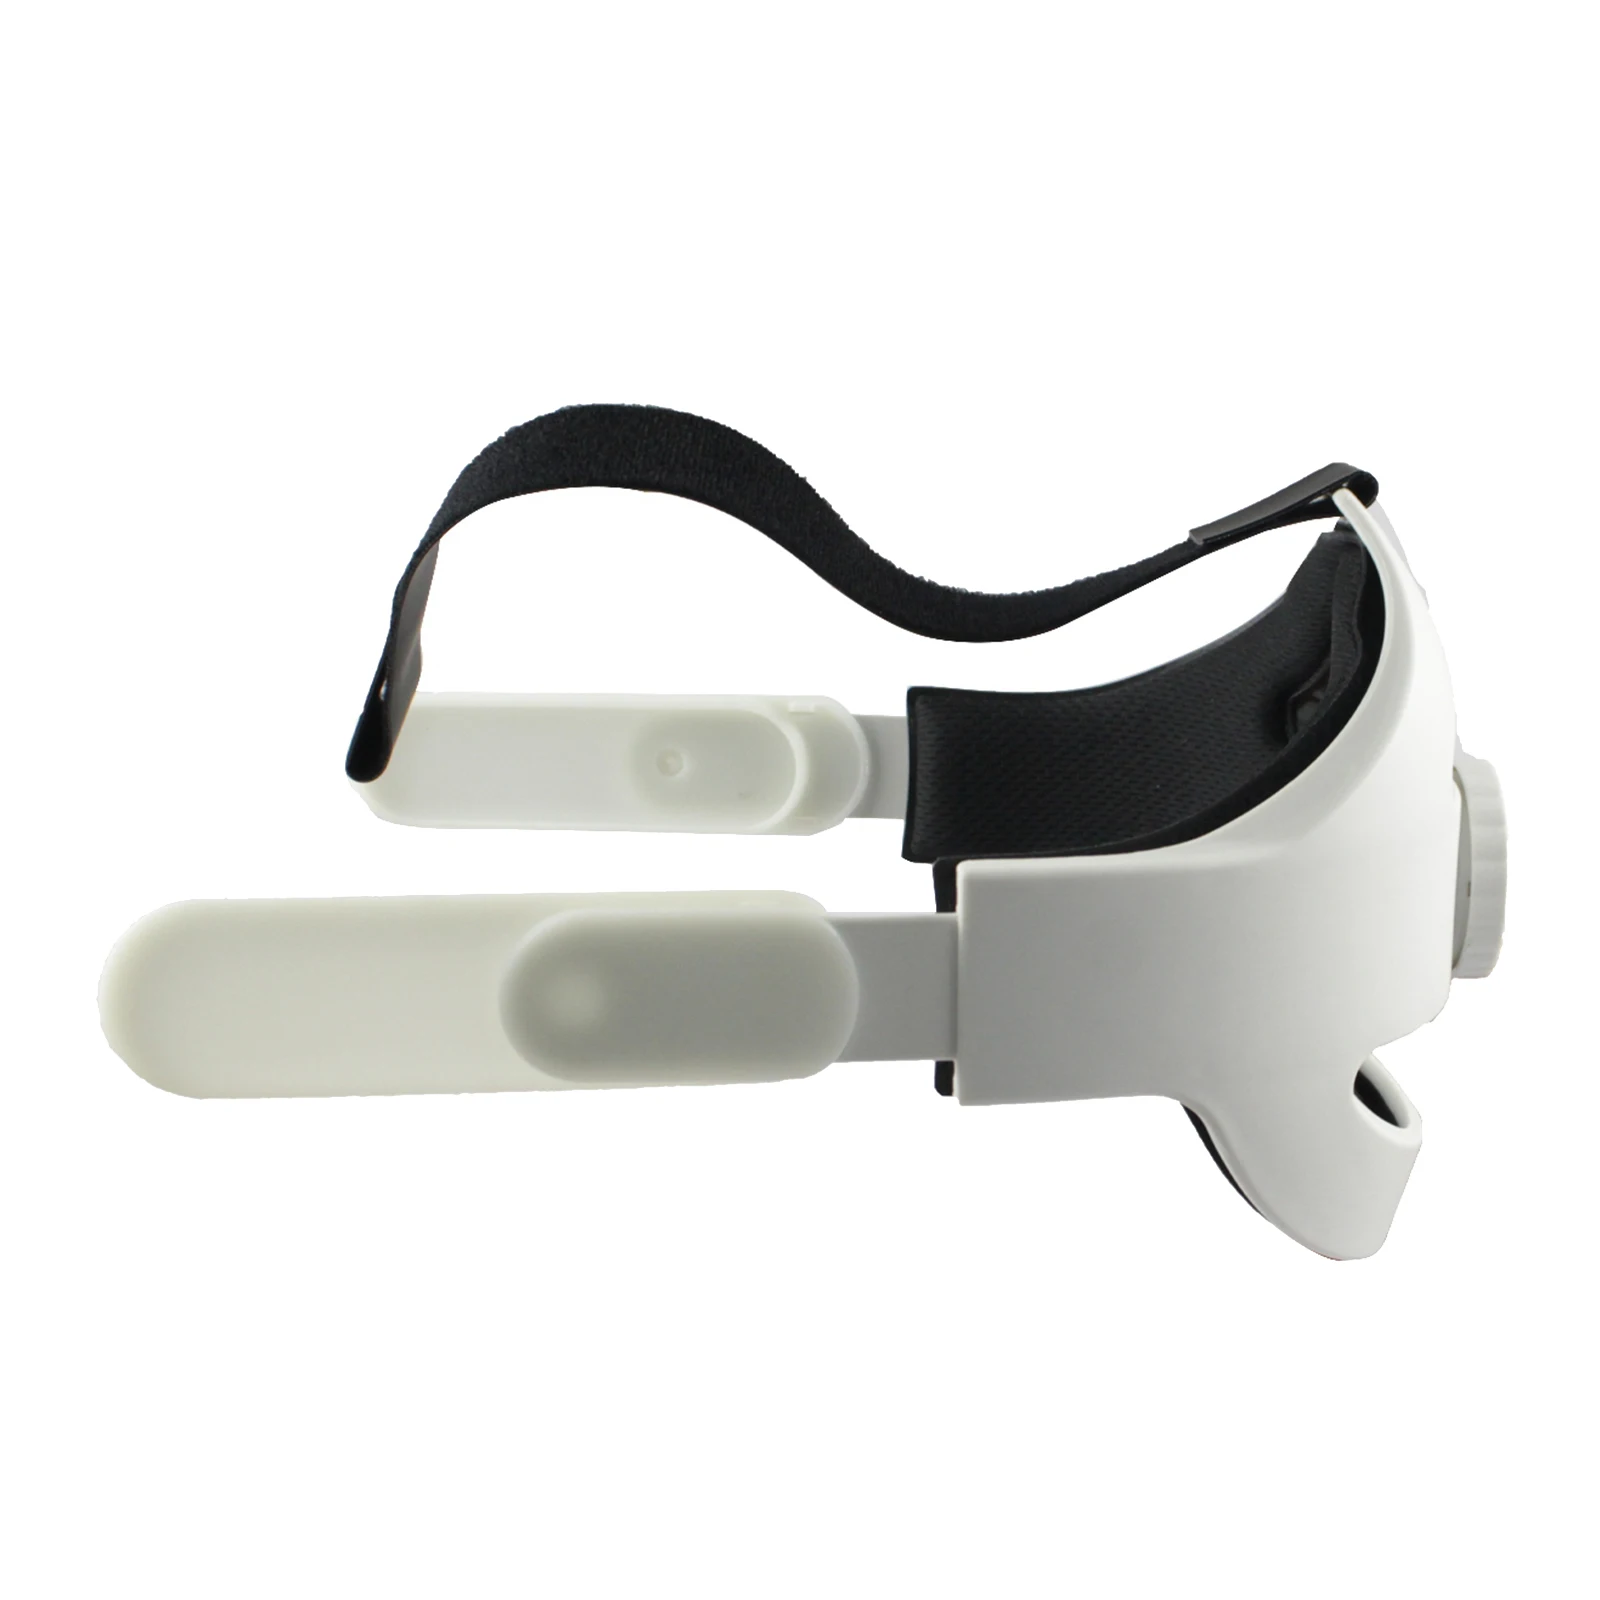 Adjustable for  Quest 2 Head Strap VR Elite Strap,improve Comfort Reduce Head Pressure Virtual Reality Accessories